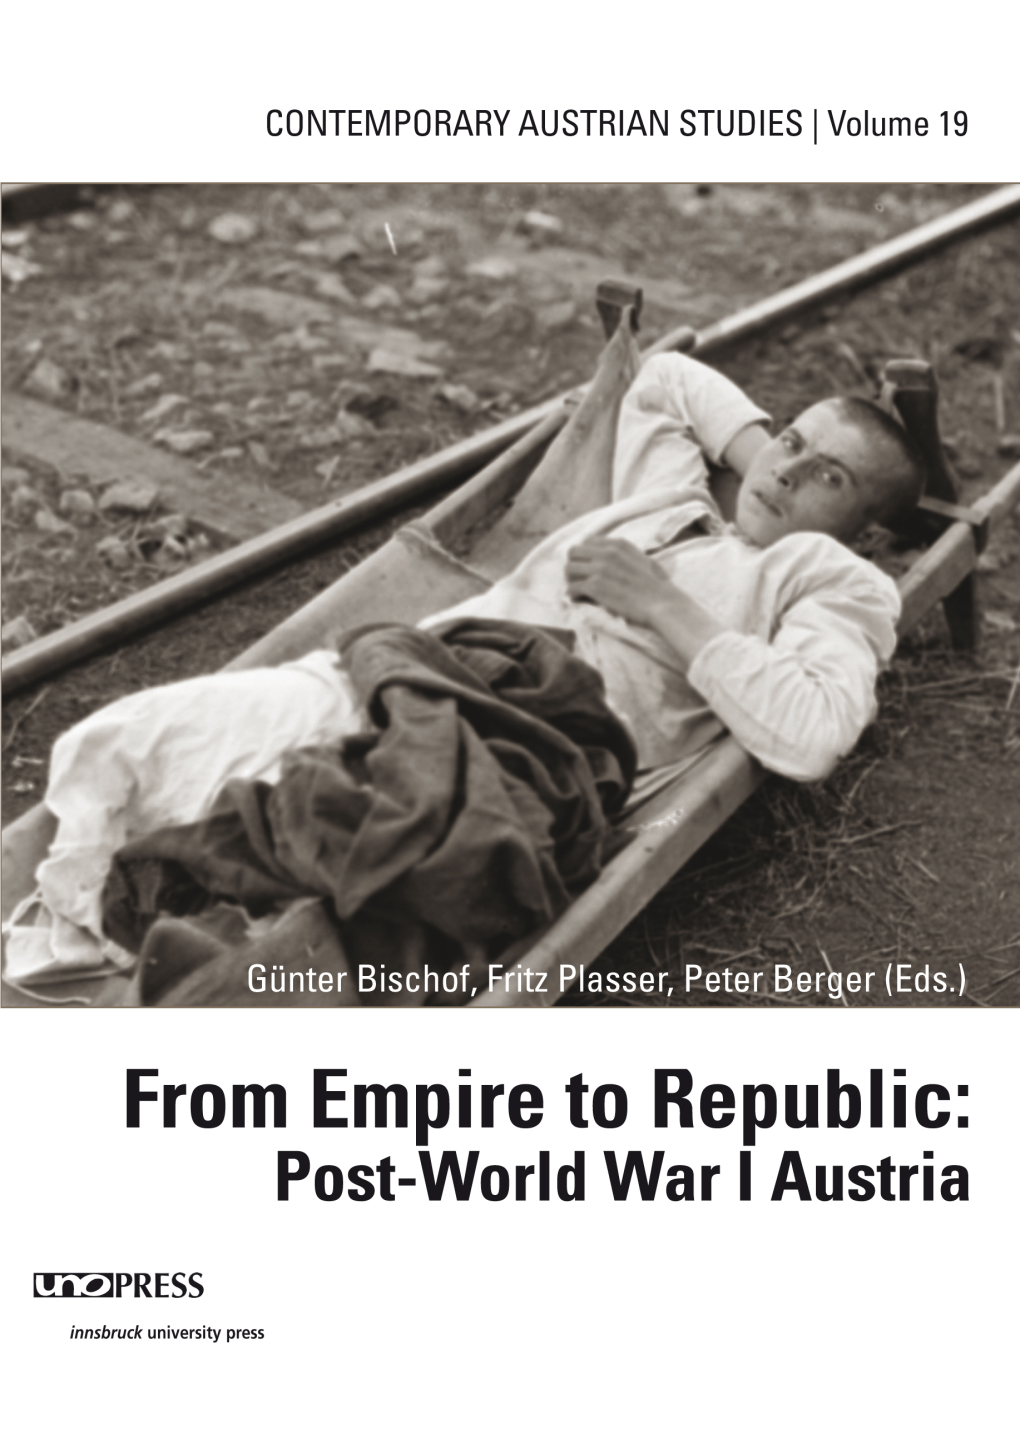 Post-World War I Austria